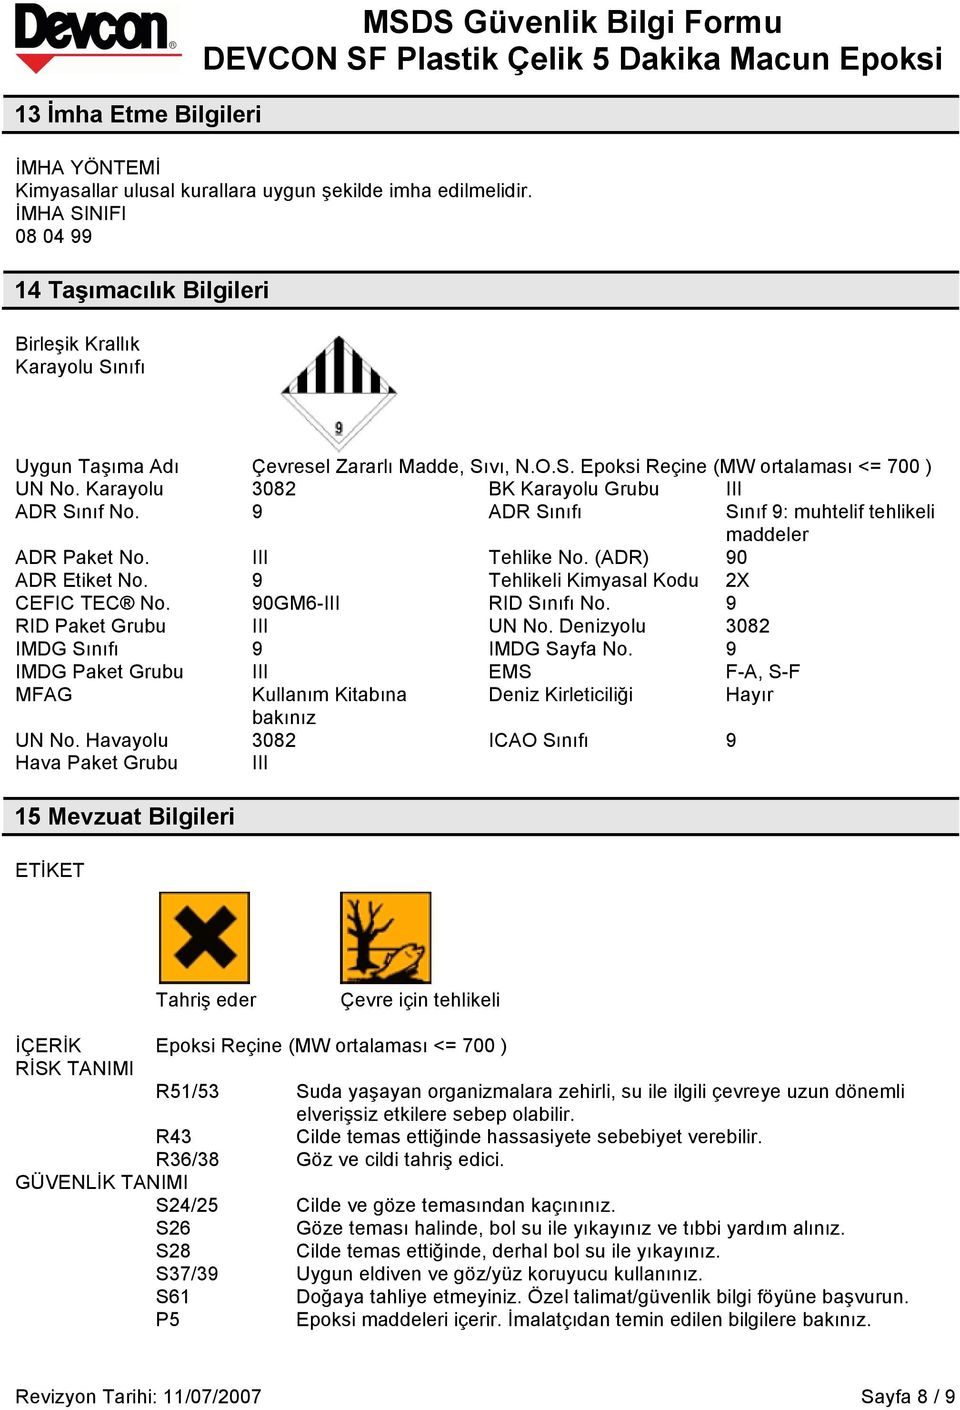 Karayolu 3082 BK Karayolu Grubu III ADR Sınıf No. 9 ADR Sınıfı Sınıf 9: muhtelif tehlikeli maddeler ADR Paket No. III Tehlike No. (ADR) 90 ADR Etiket No. 9 Tehlikeli Kimyasal Kodu 2X CEFIC TEC No.